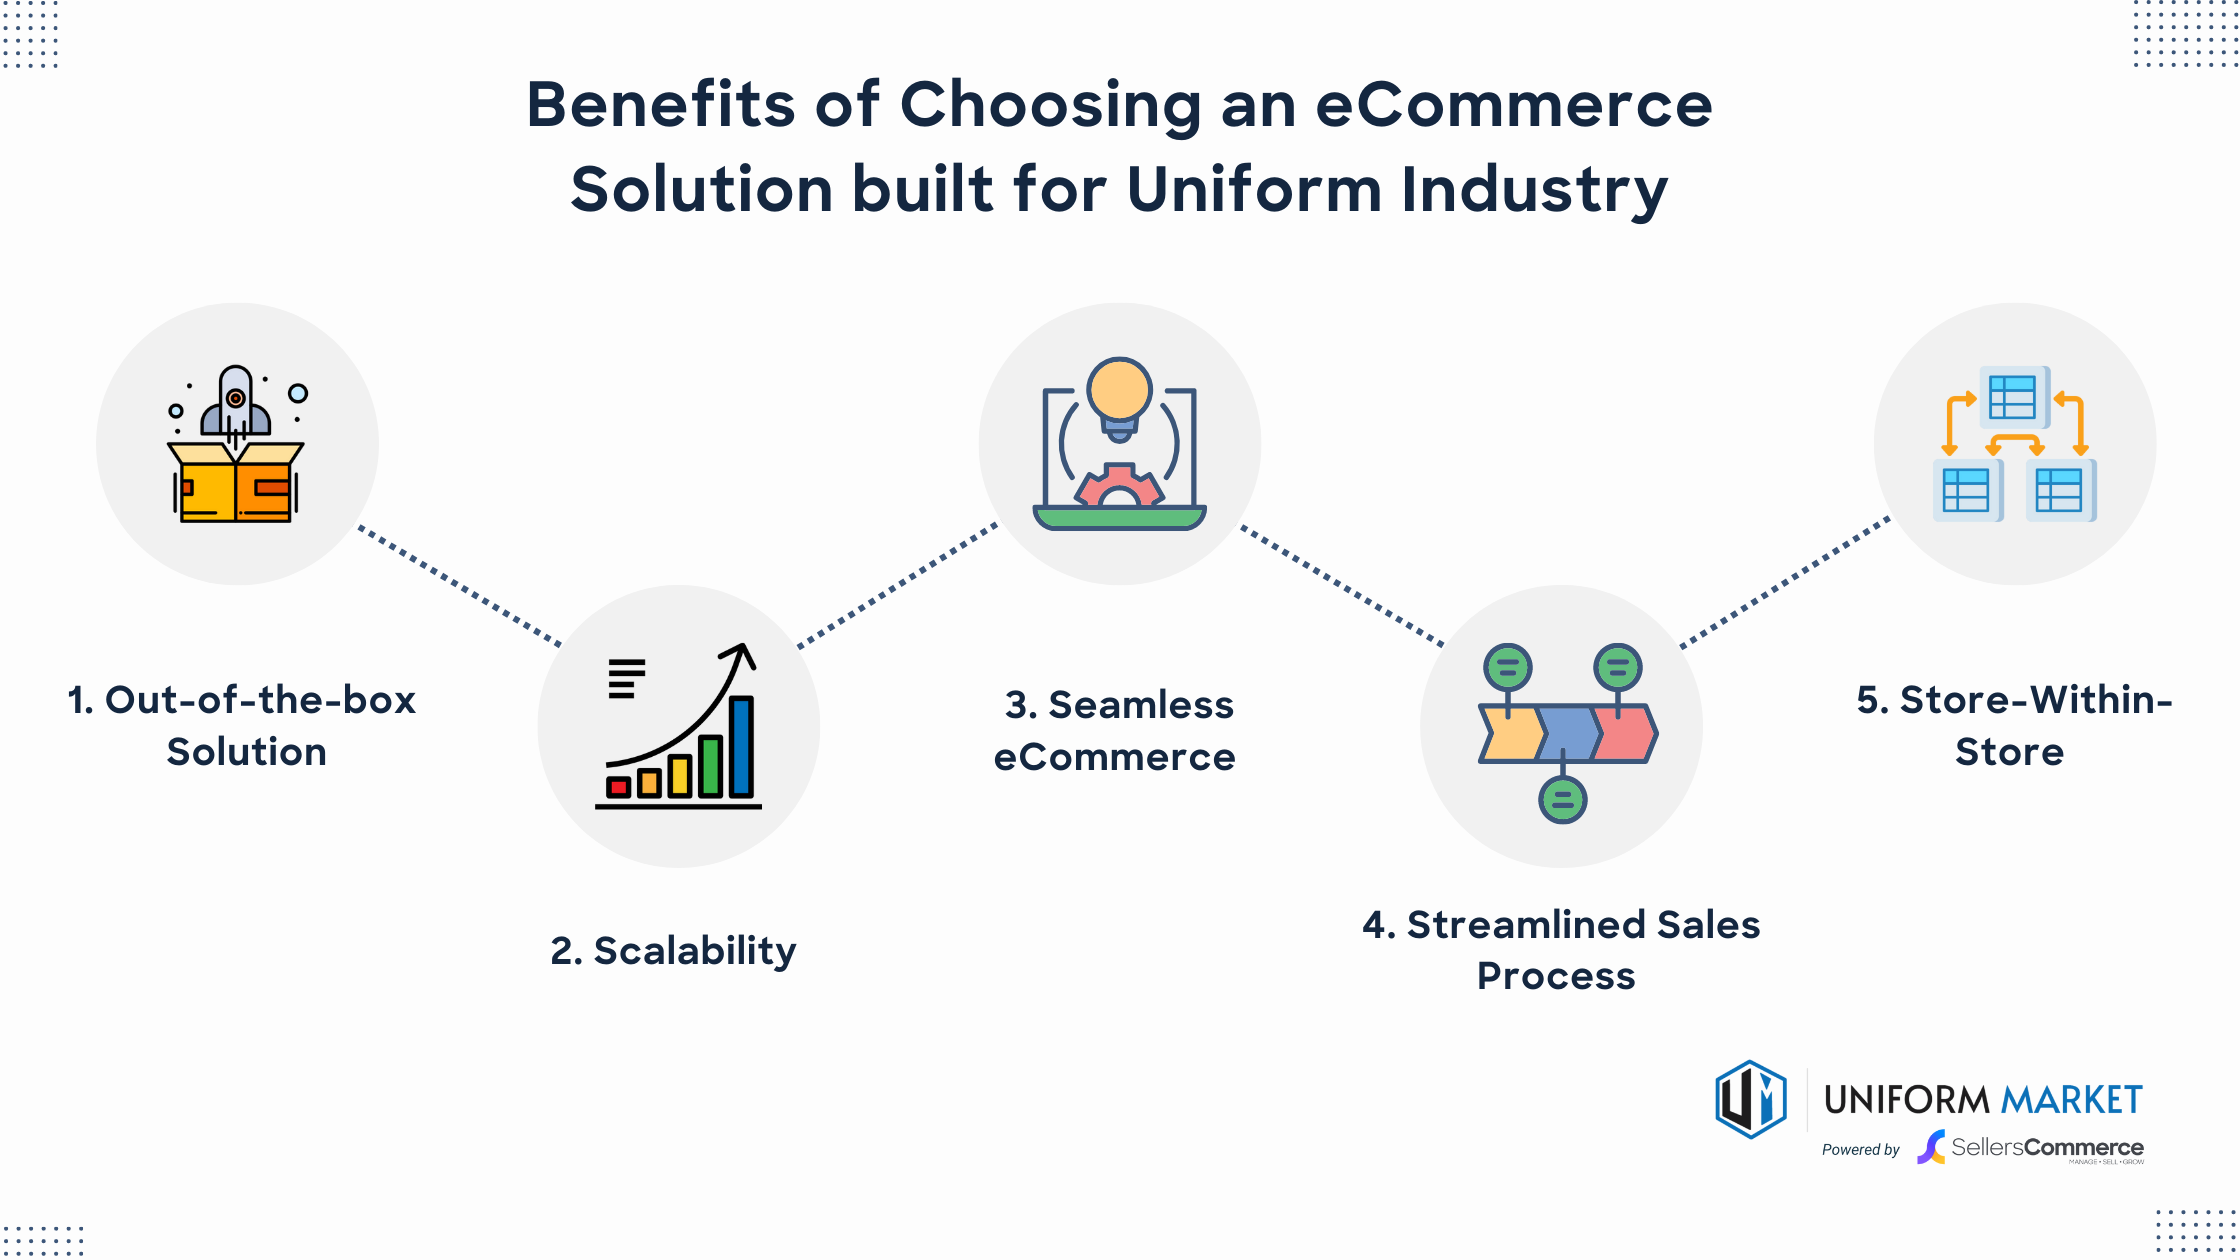 B2B eCommerce solution for Uniform Industry